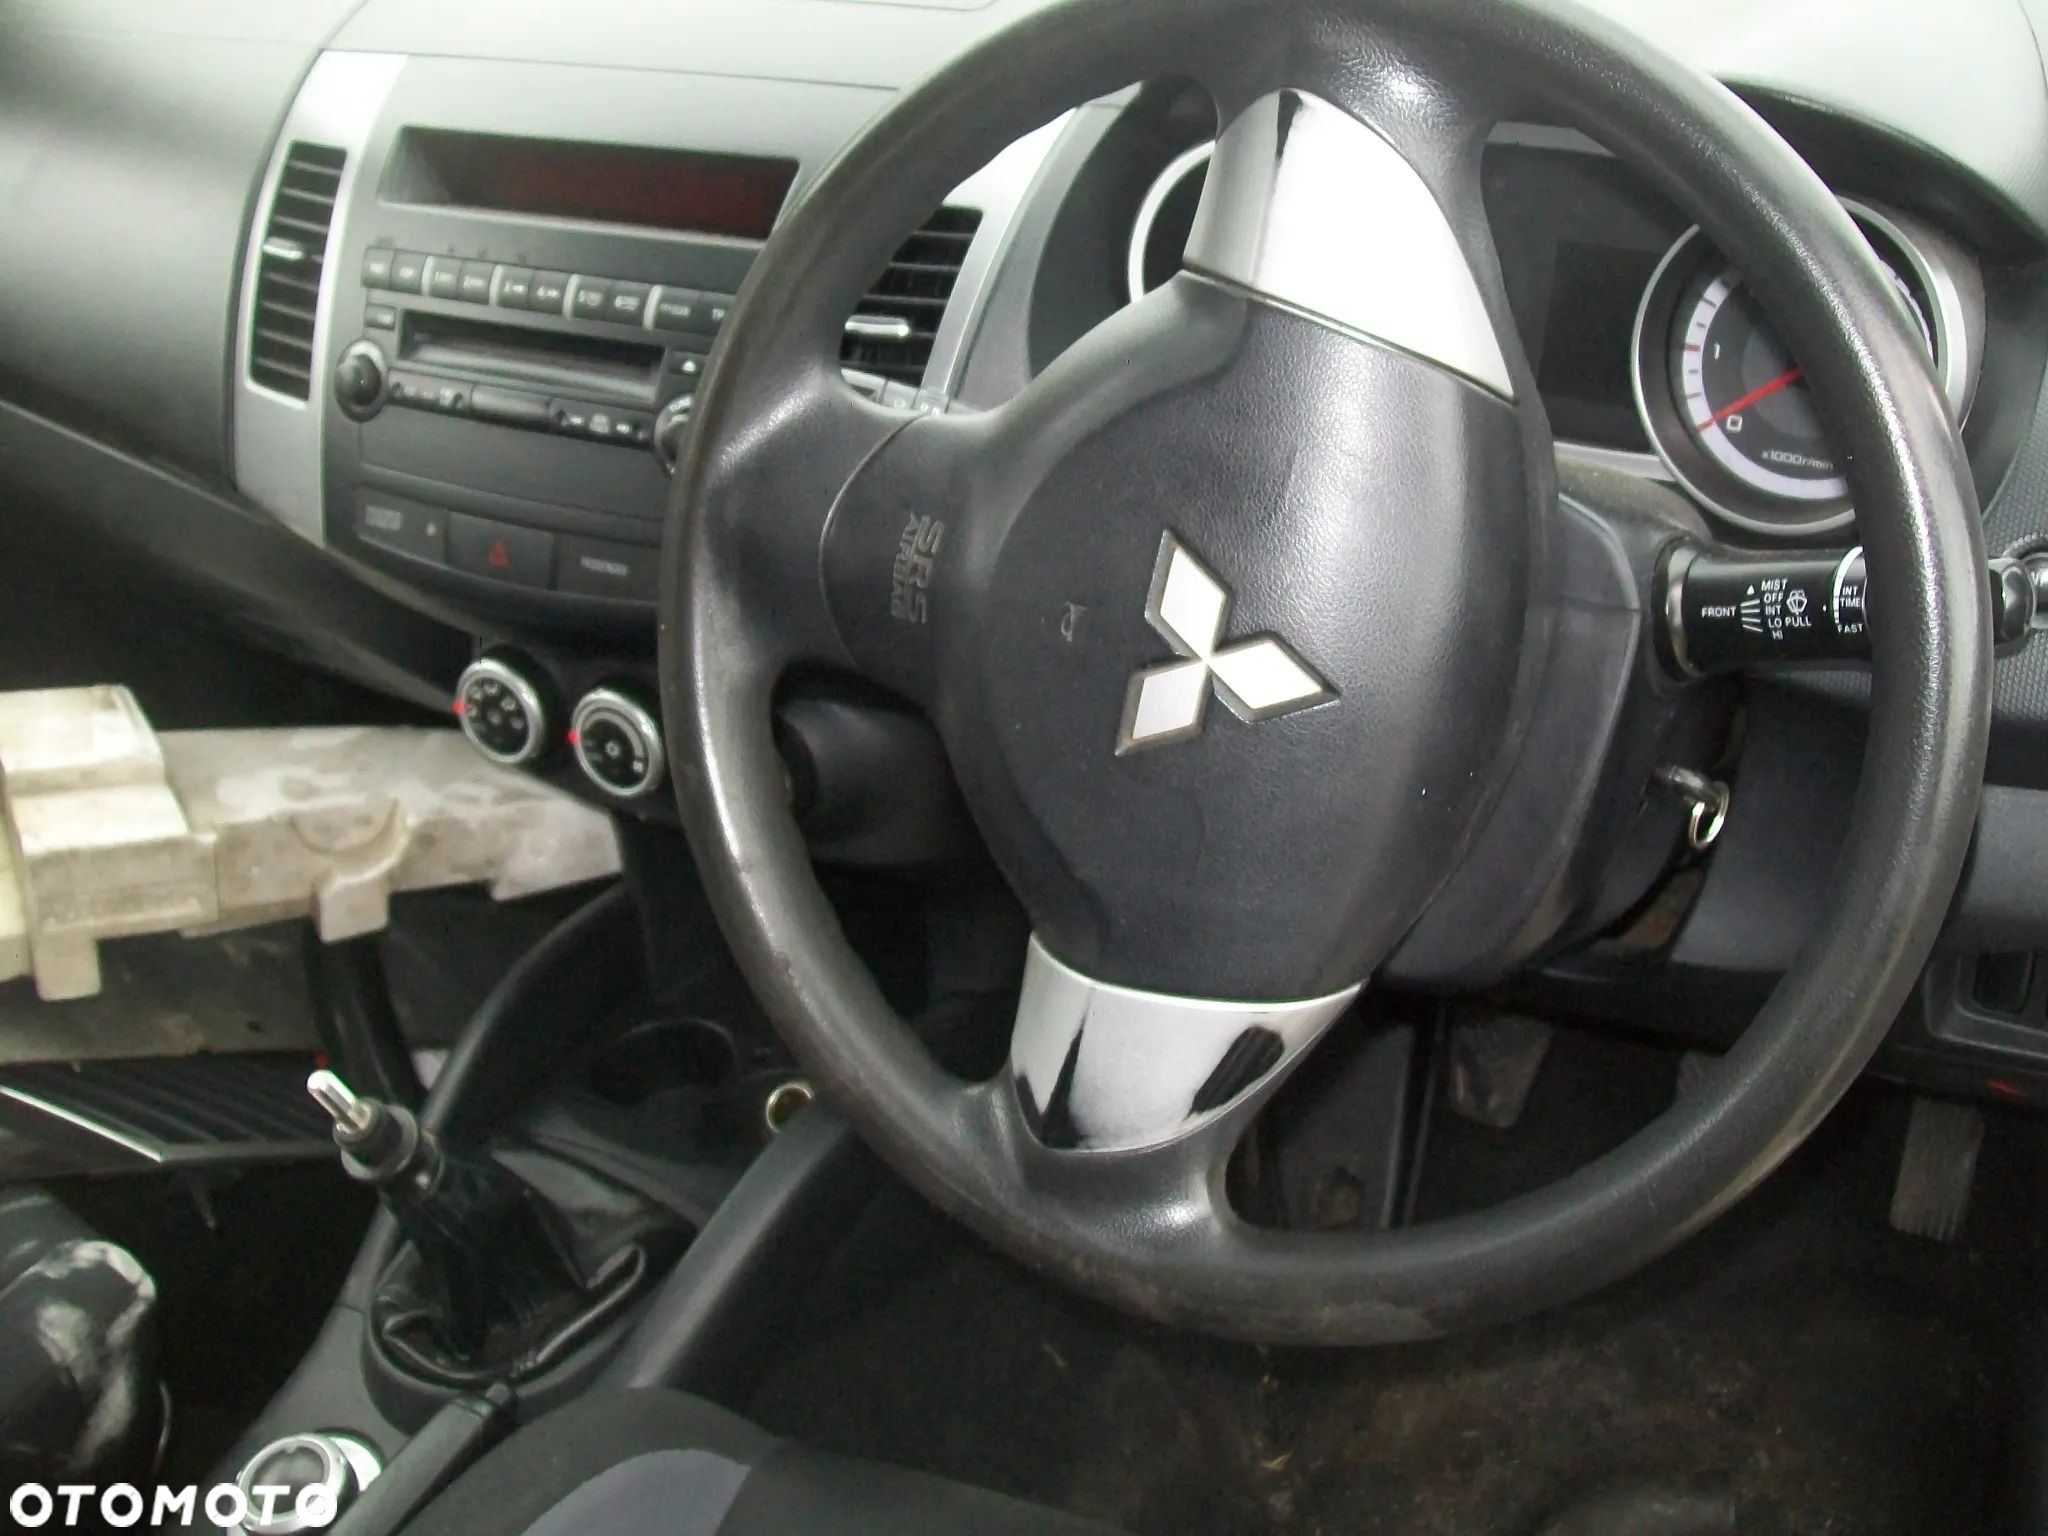 airbag oudlander - 1